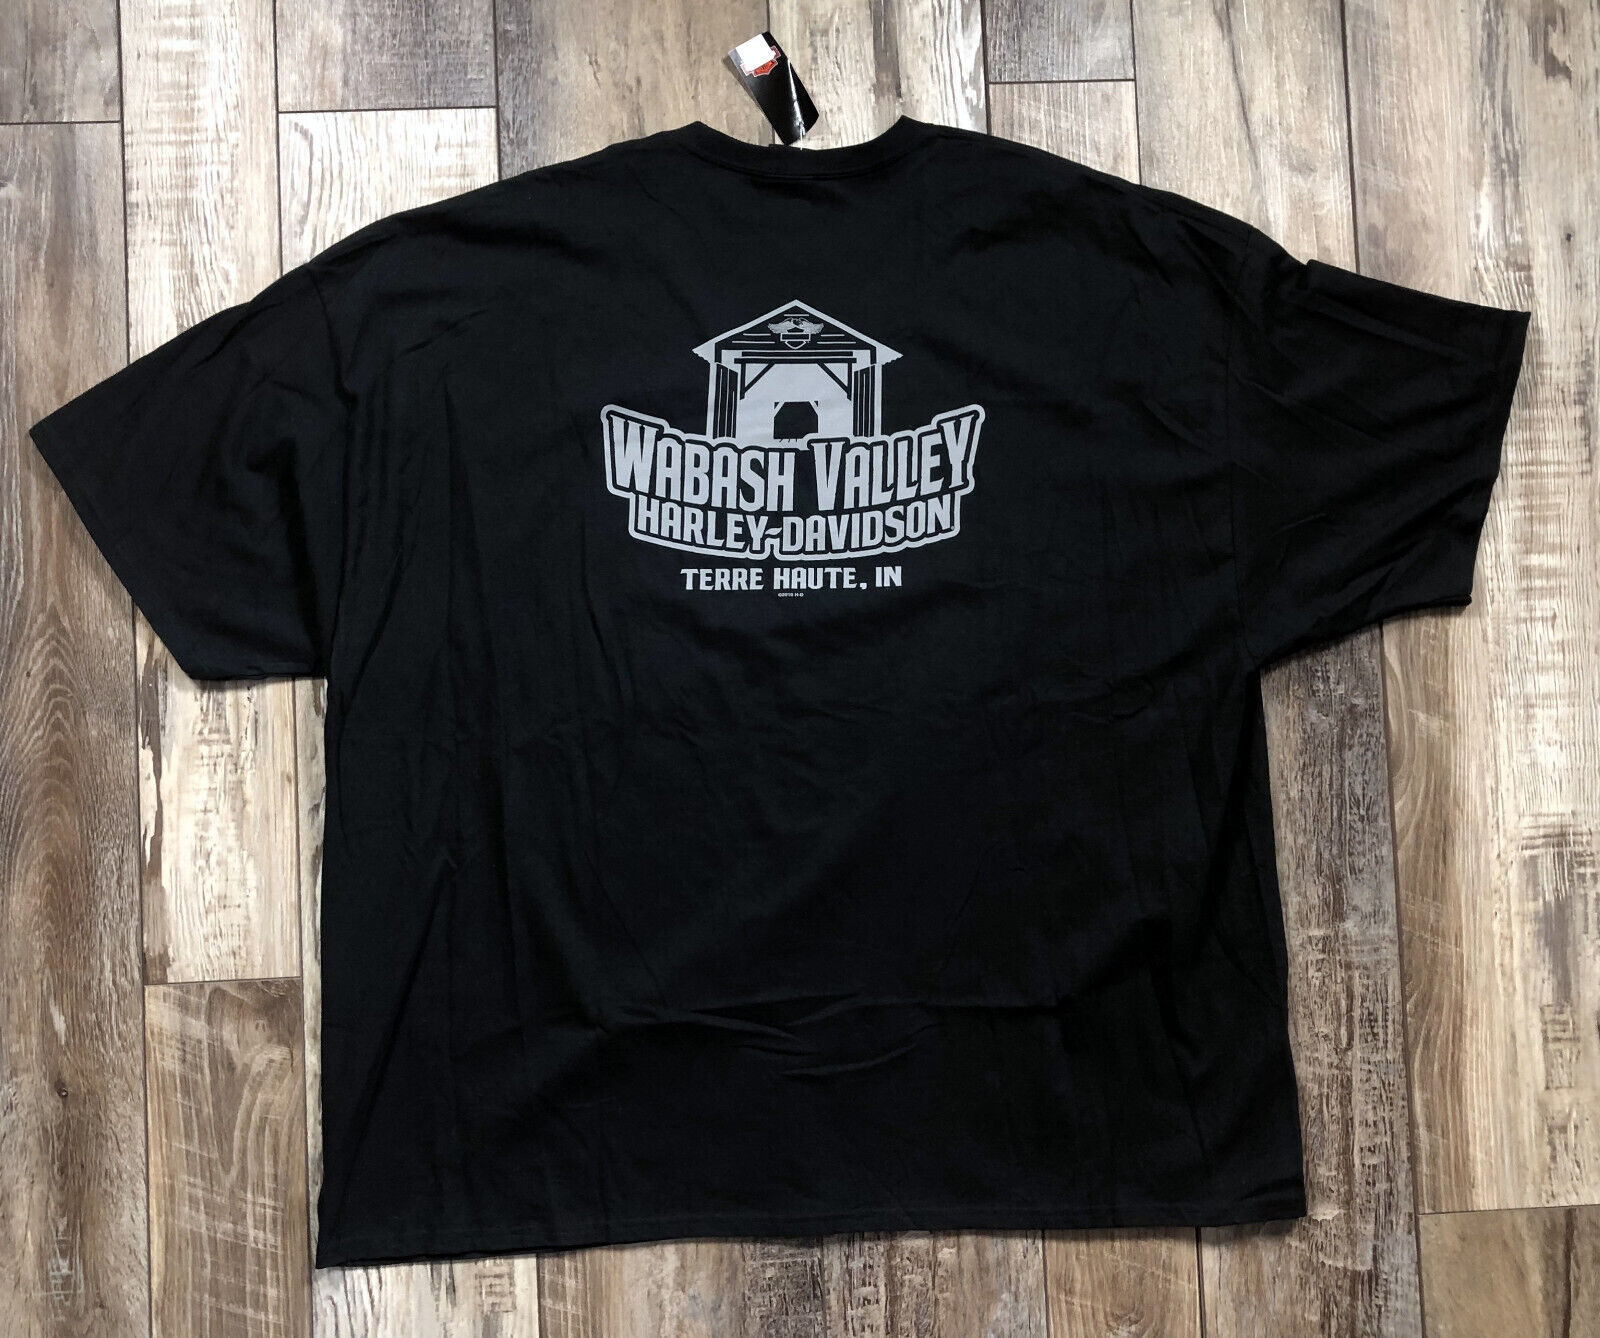 Primary image for Harley-Davidson T-Shirt Black Wabash Valley Terre Haute, IN Bridge - 5XL